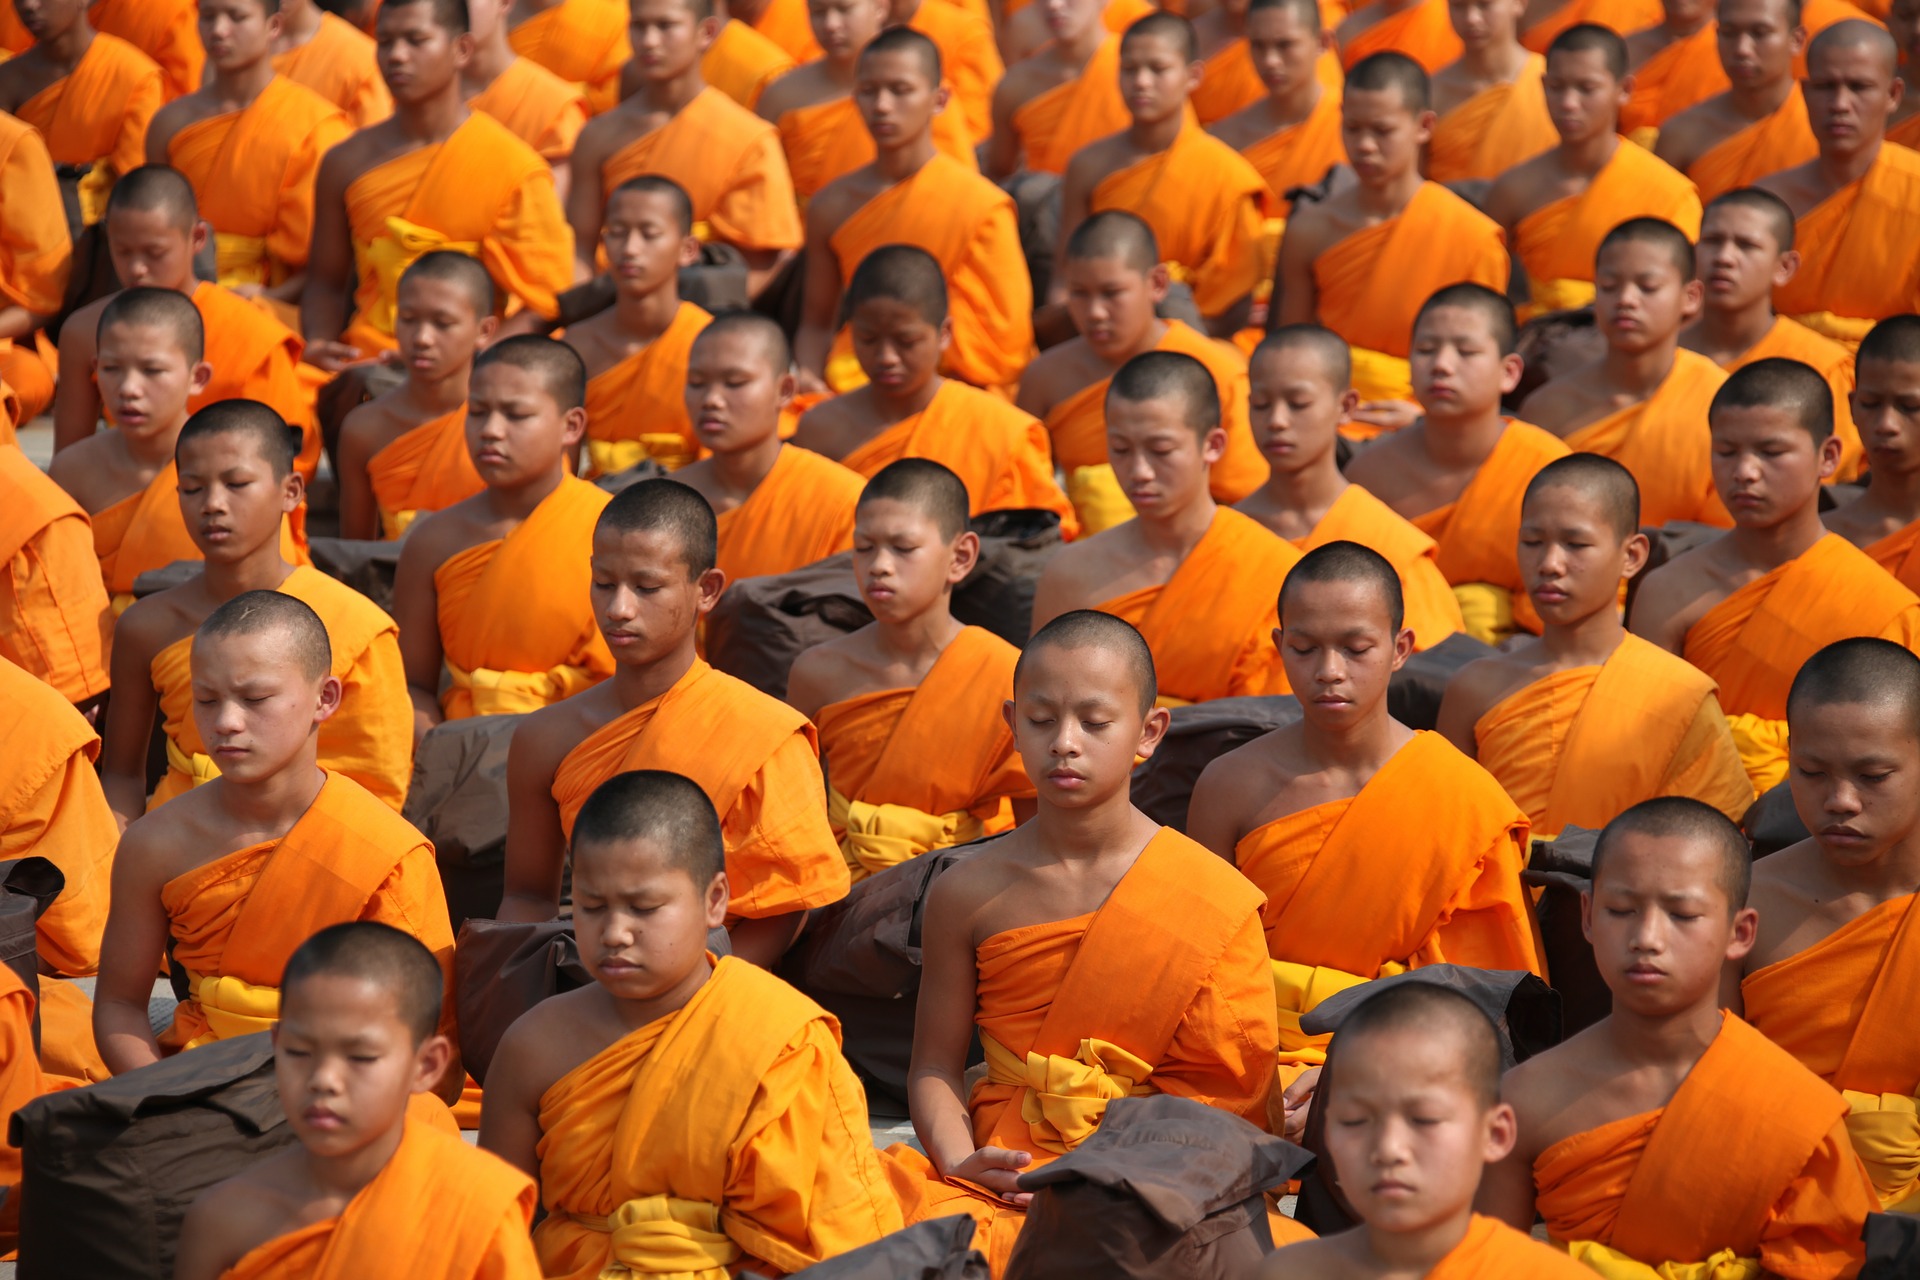 Young Buddhists meditating.